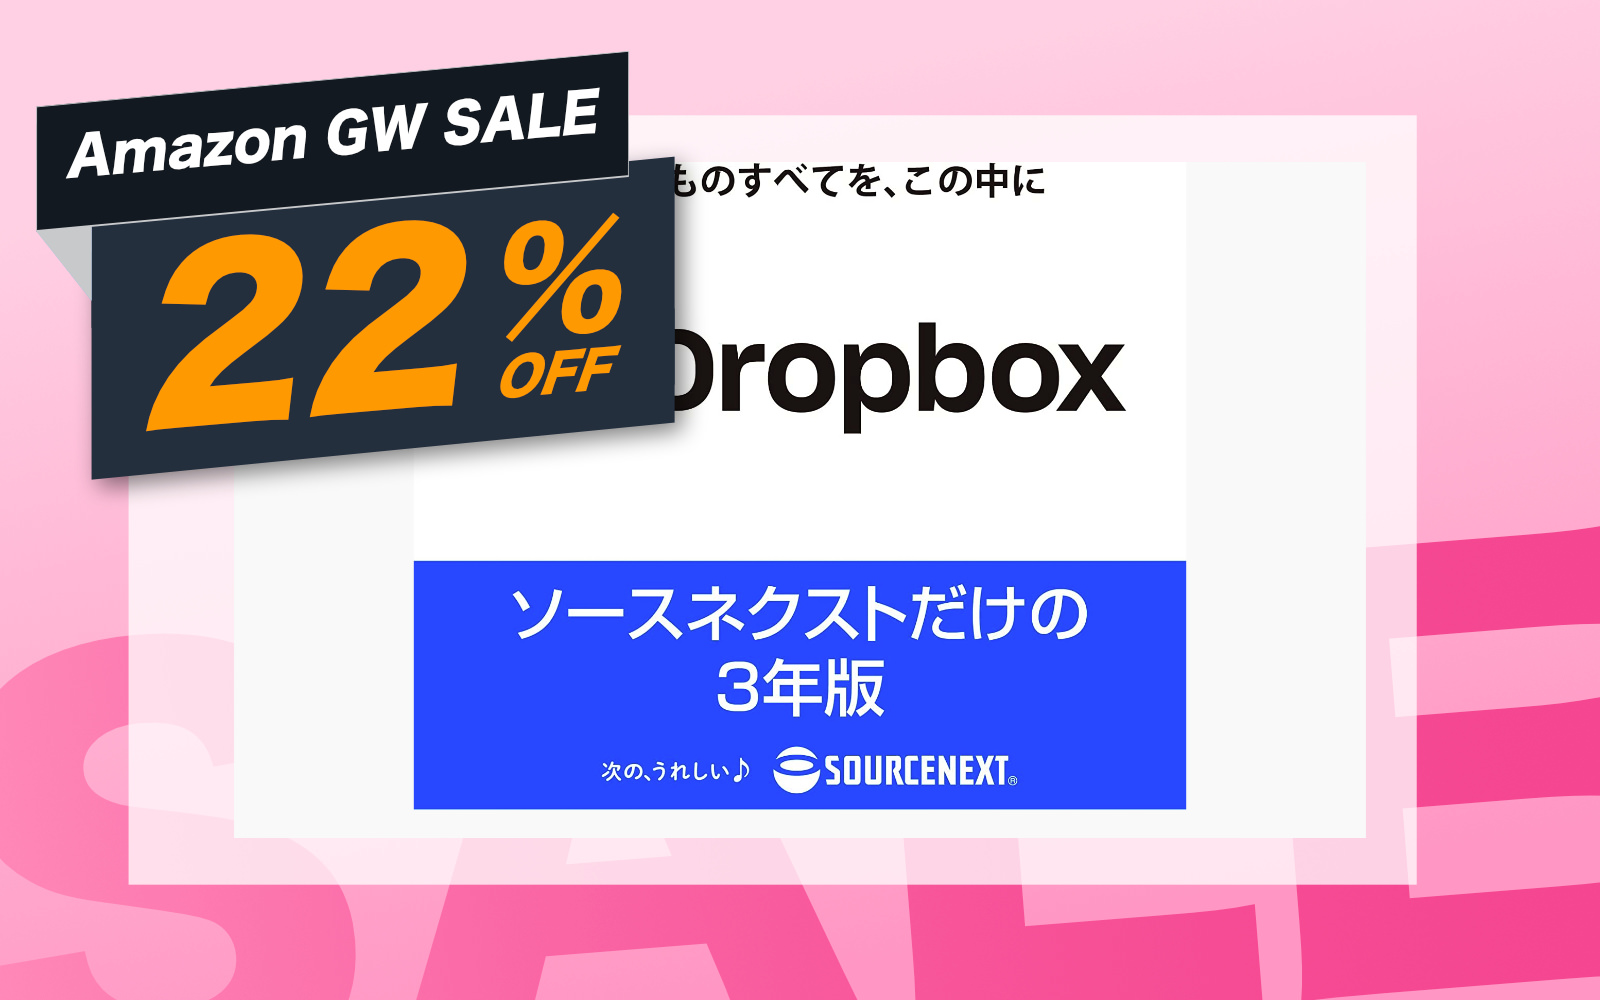 Dropbox sale on amazon gw sale